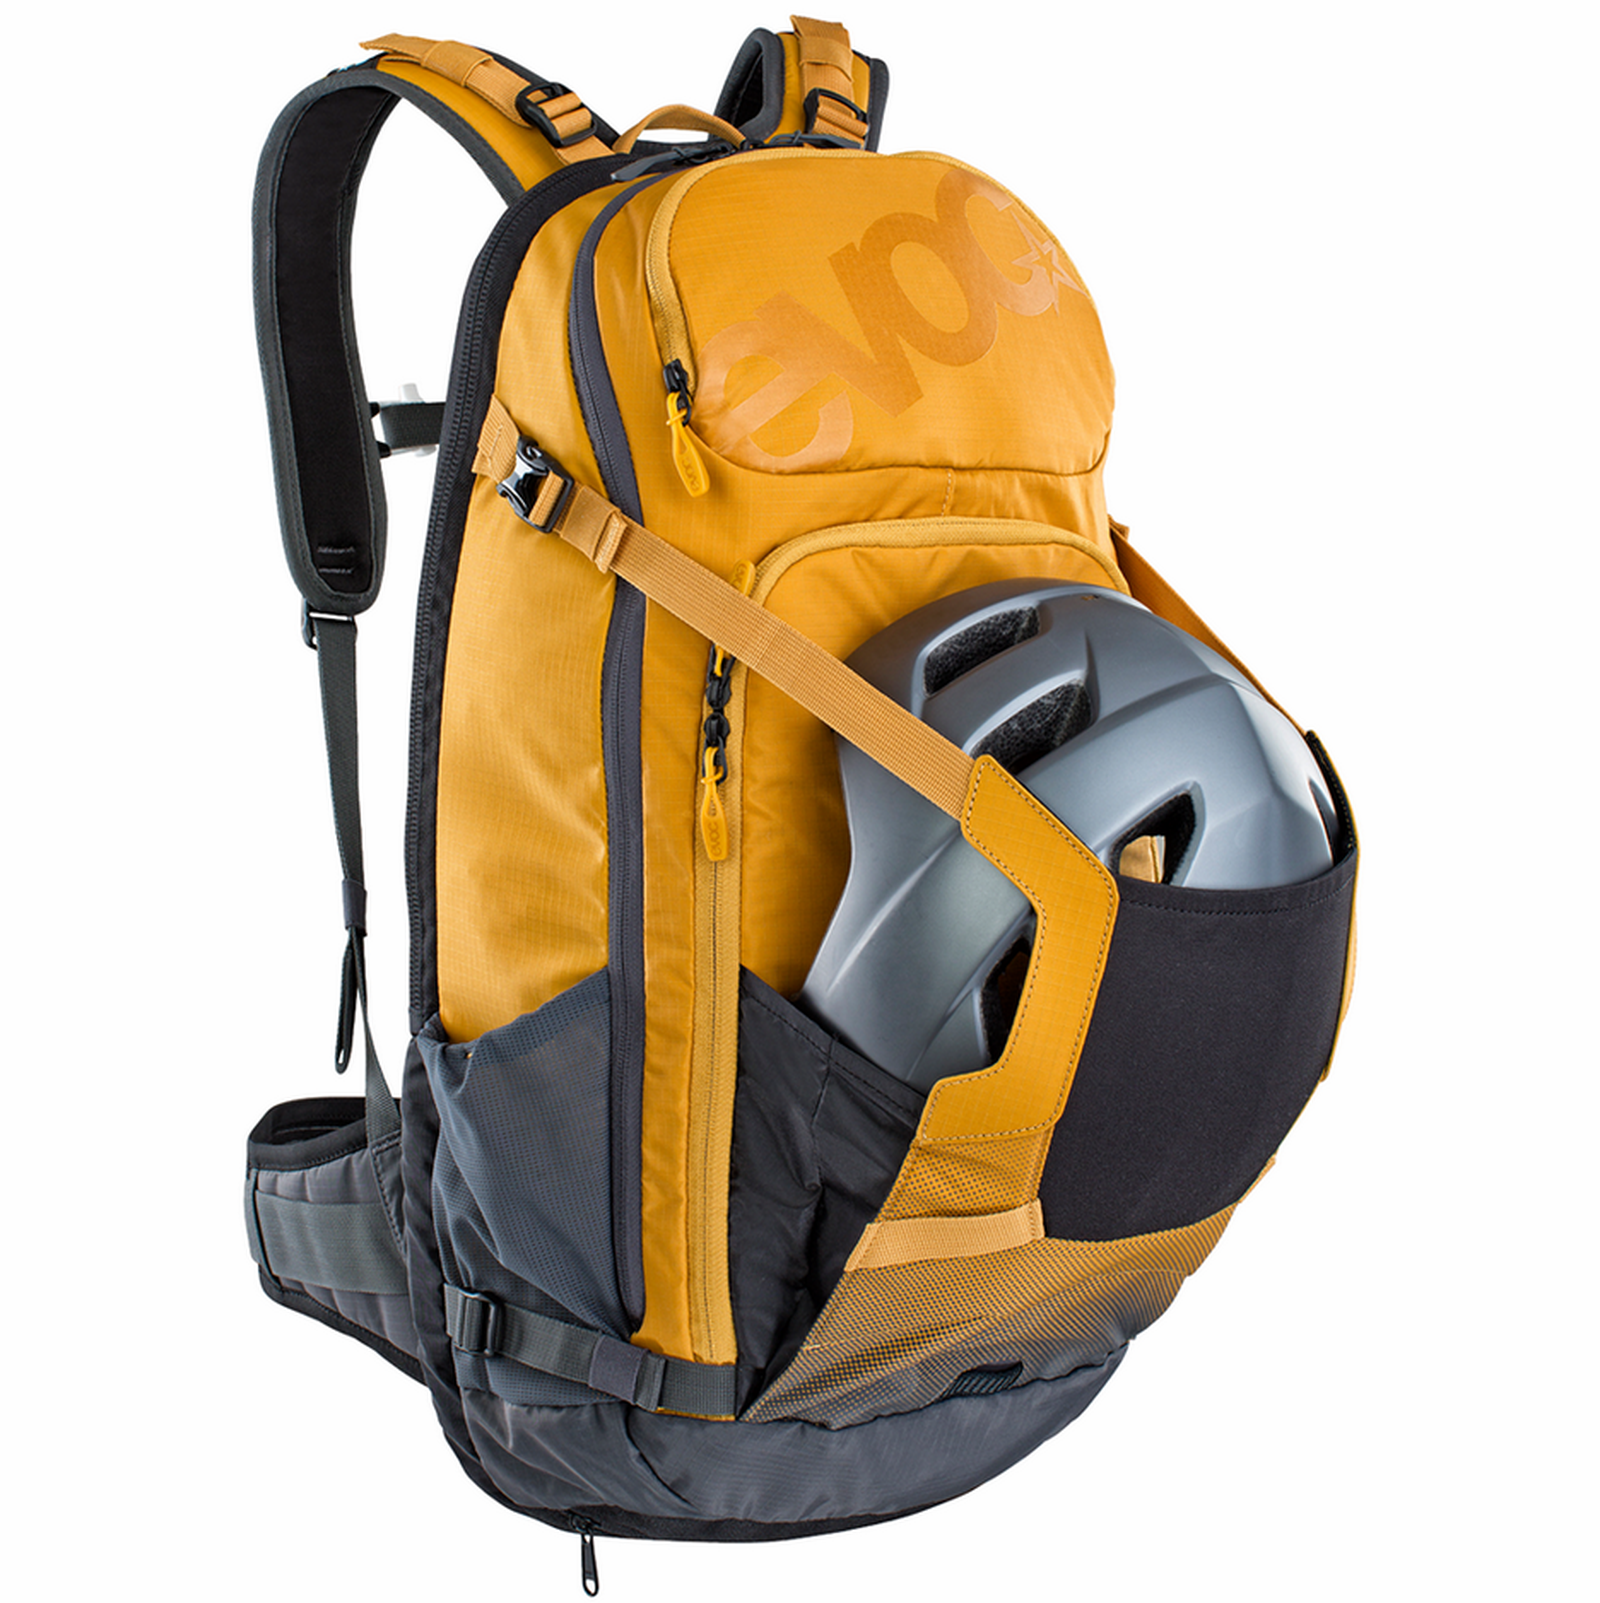 FR Trail E-Ride 20L Backpack